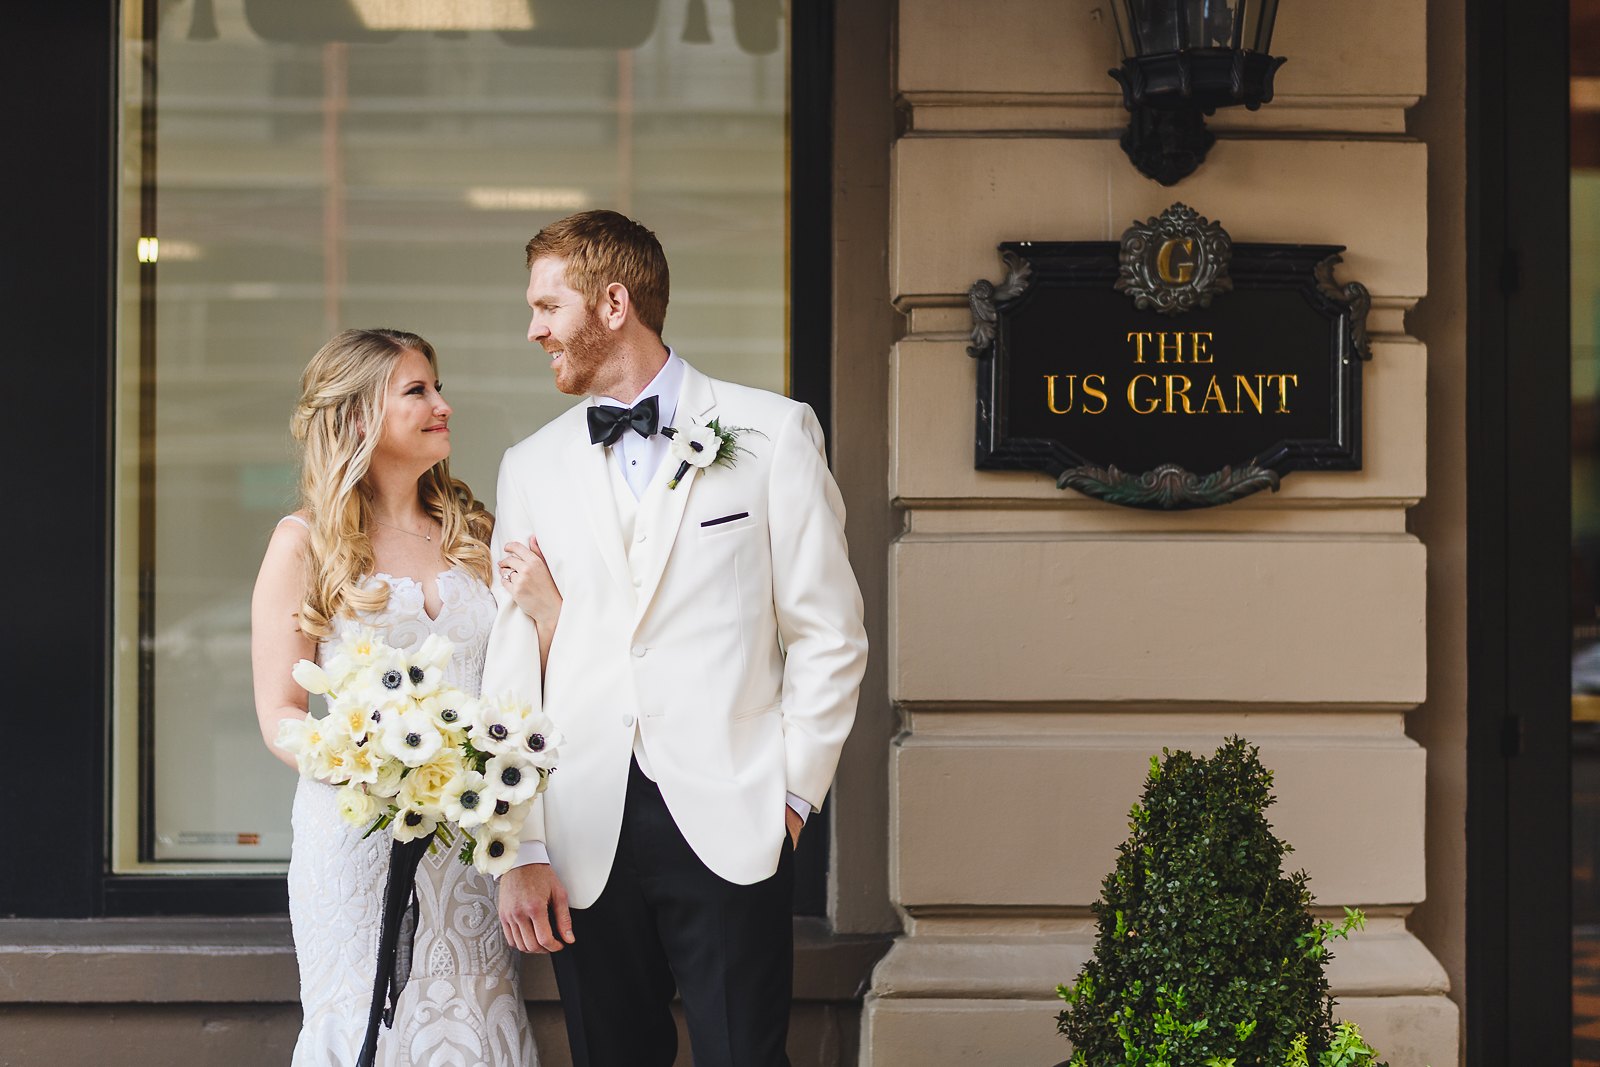 The US Grant wedding